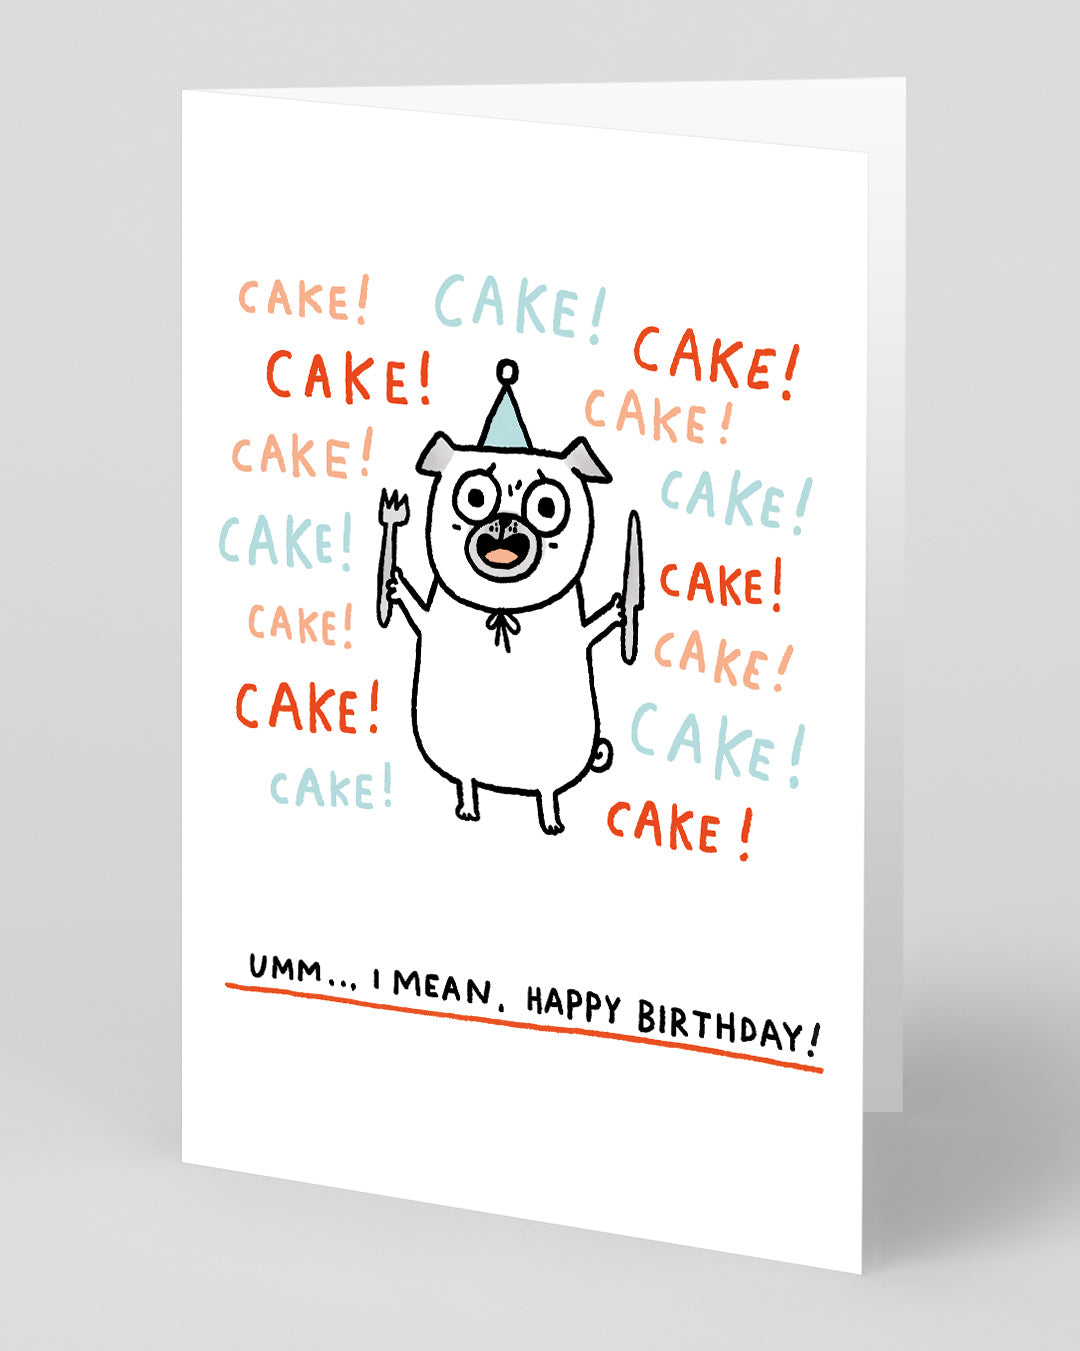 Personalised Cake! Cake! Cake! Birthday Card